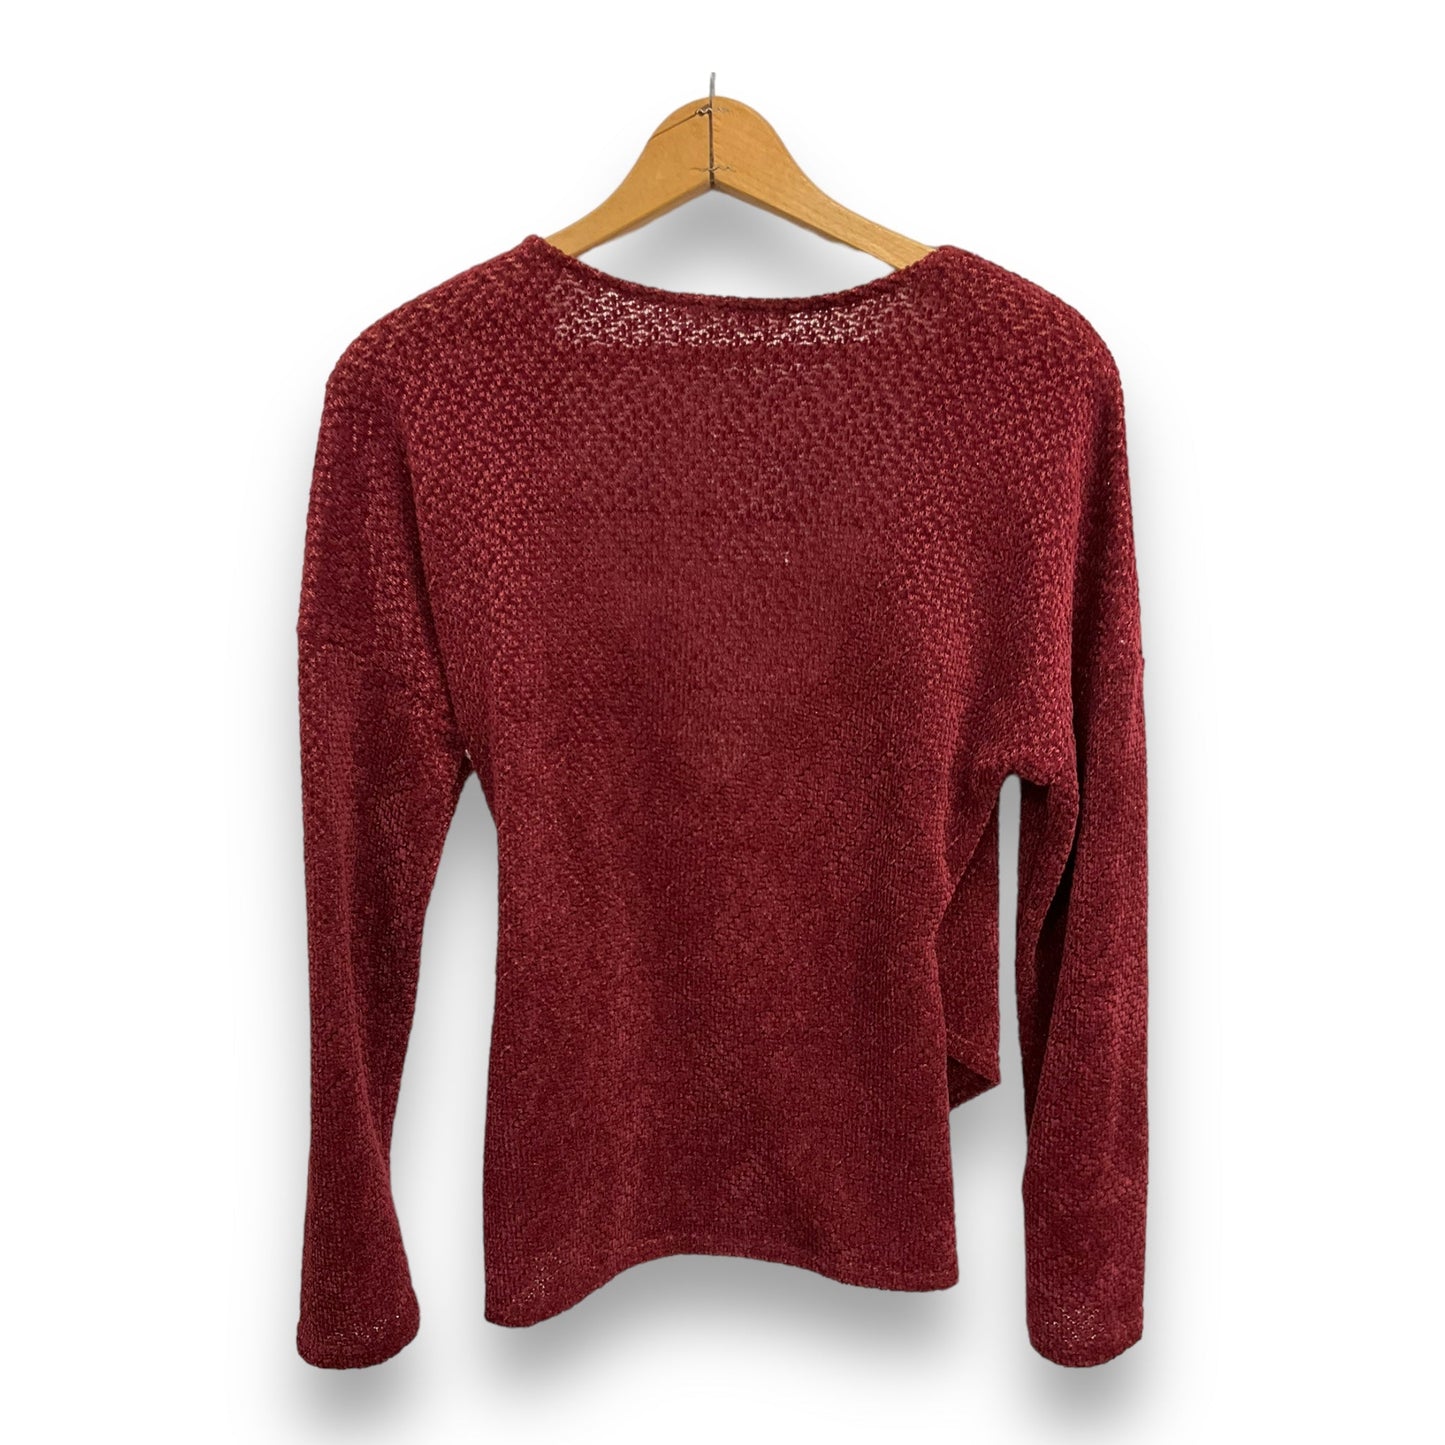 Sweater By Lush  Size: M